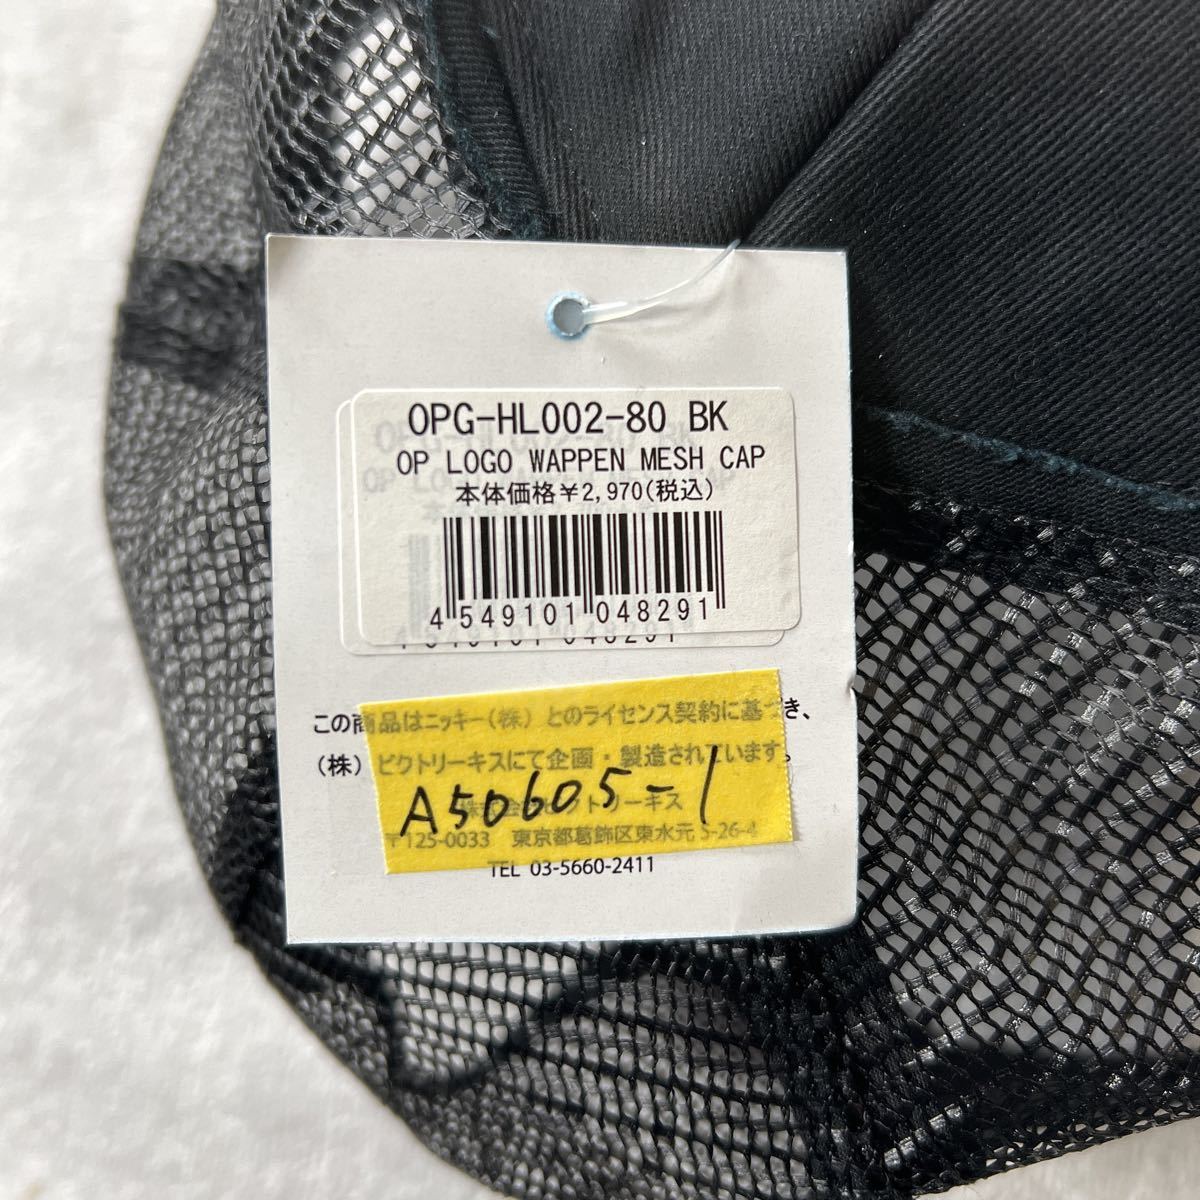 Ocean pacific OPo-pi- Logo badge mesh cap OPG-HL005-80 BLACK size adjustment possibility new goods A50605-1